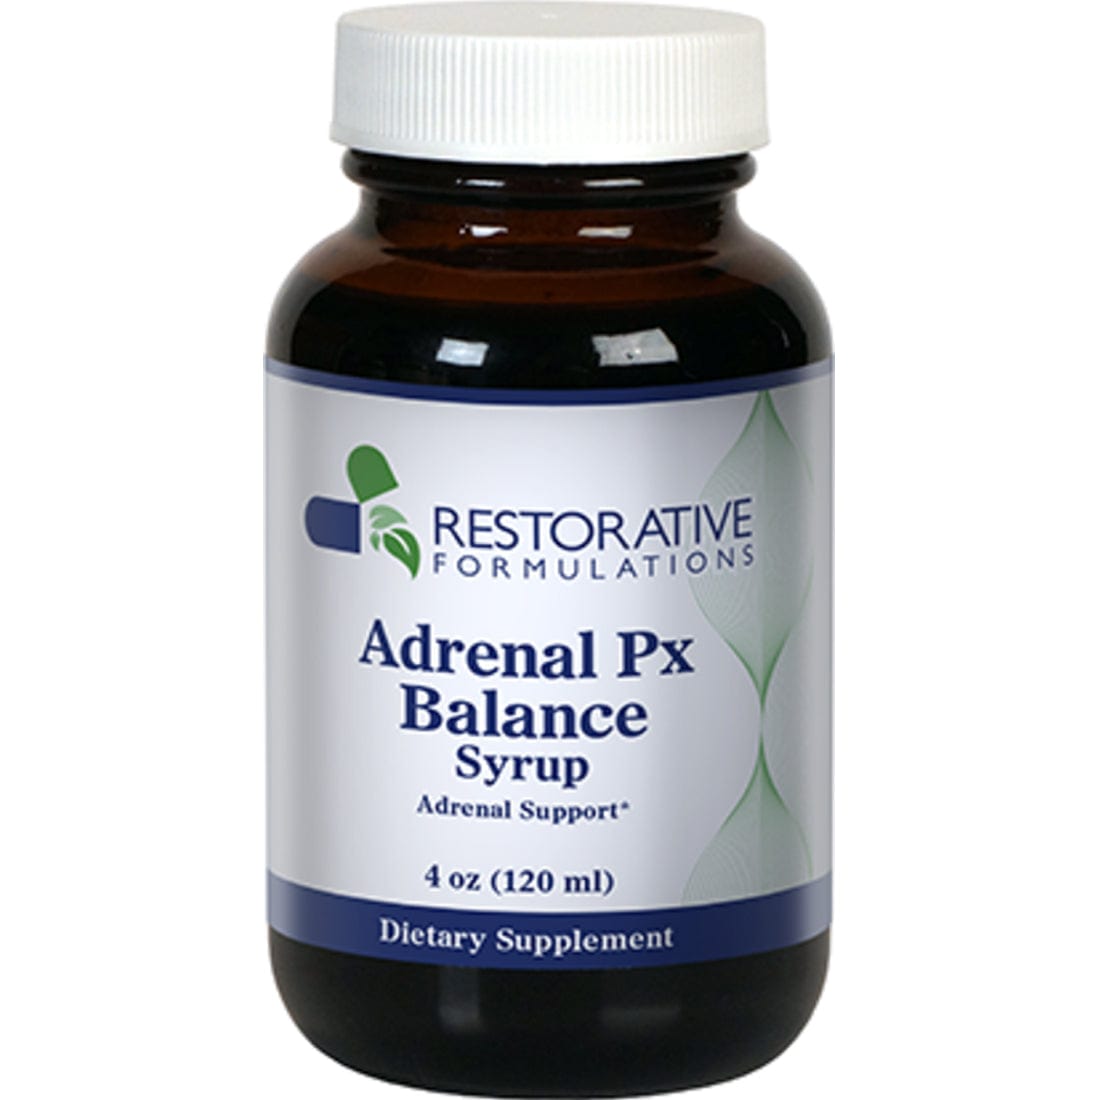 Restorative Formulations Adrenal Px Balance Syrup, 120ml